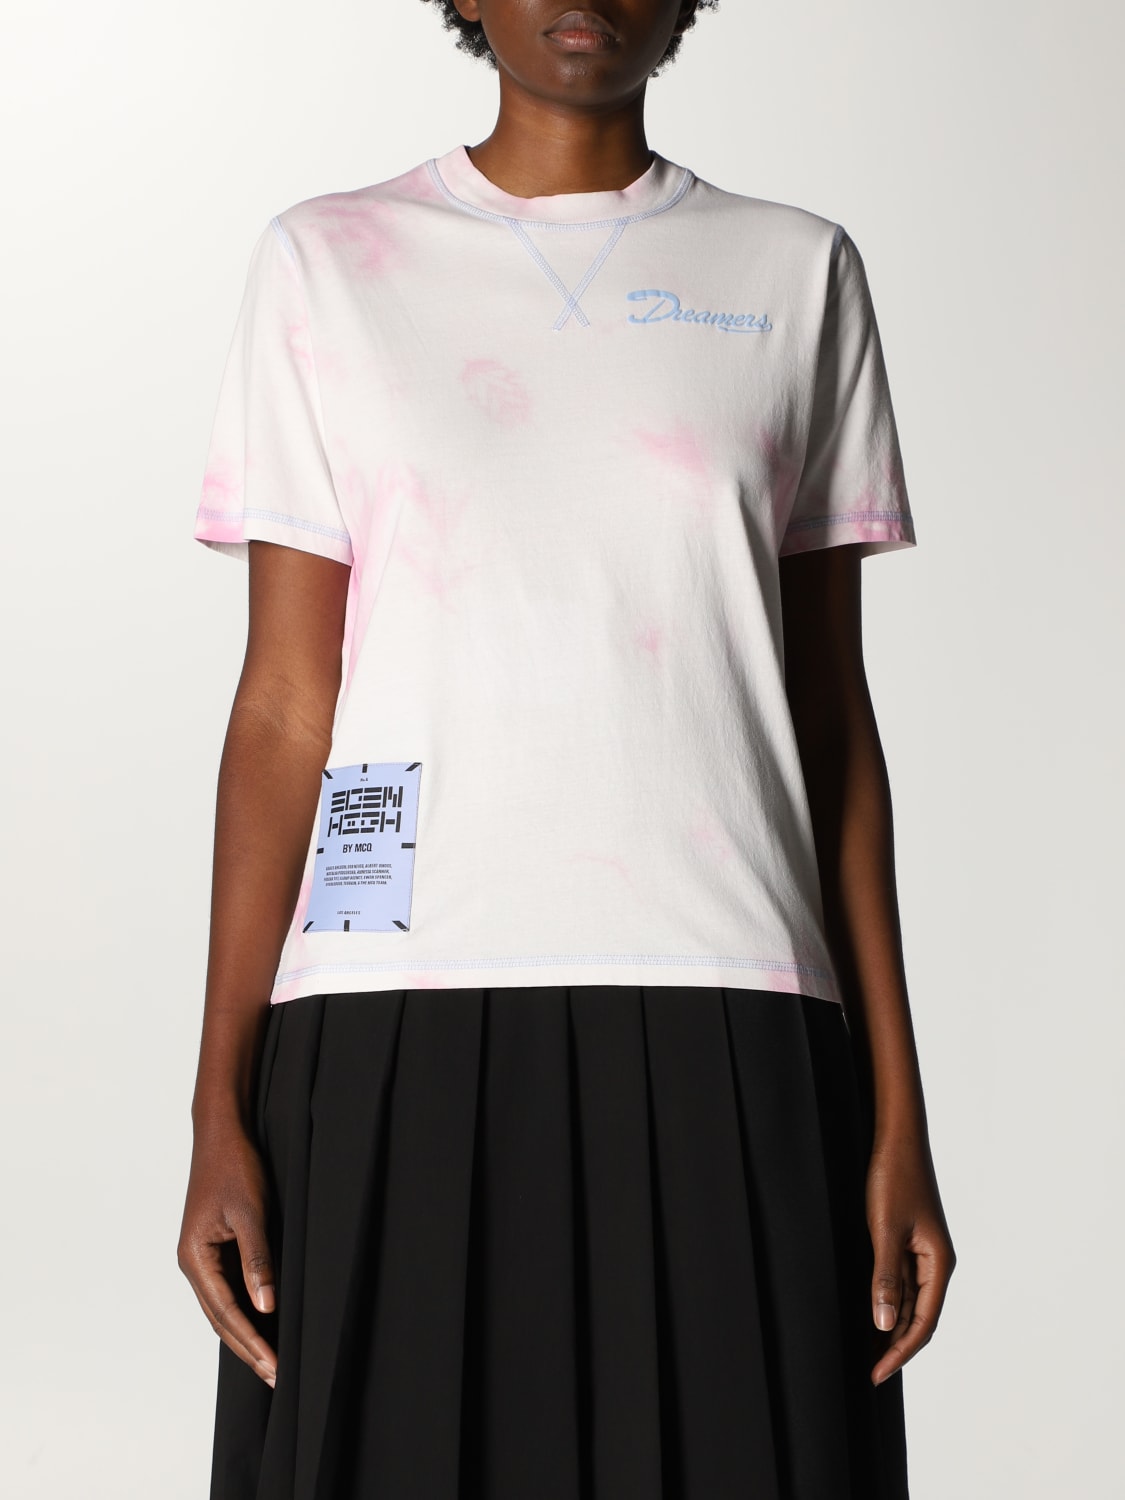 T-shirt Mcq: T-shirt Eden High by McQ in cotone con logo e stampa tie dye rosa 2